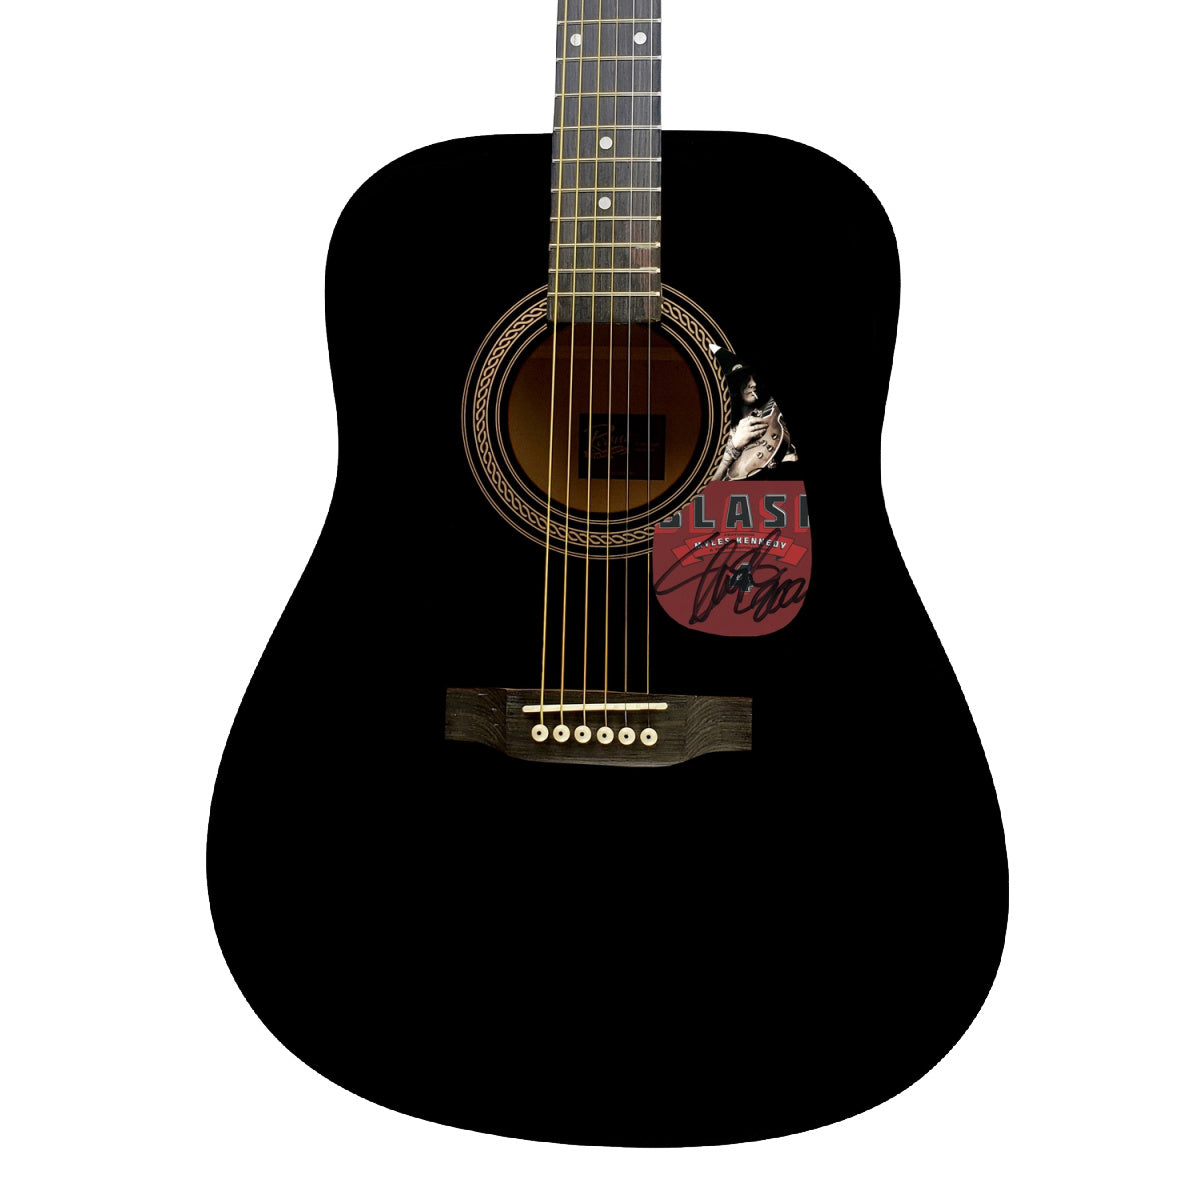 Guns N' Roses Slash Autographed Signed Acoustic Black Guitar ACOA